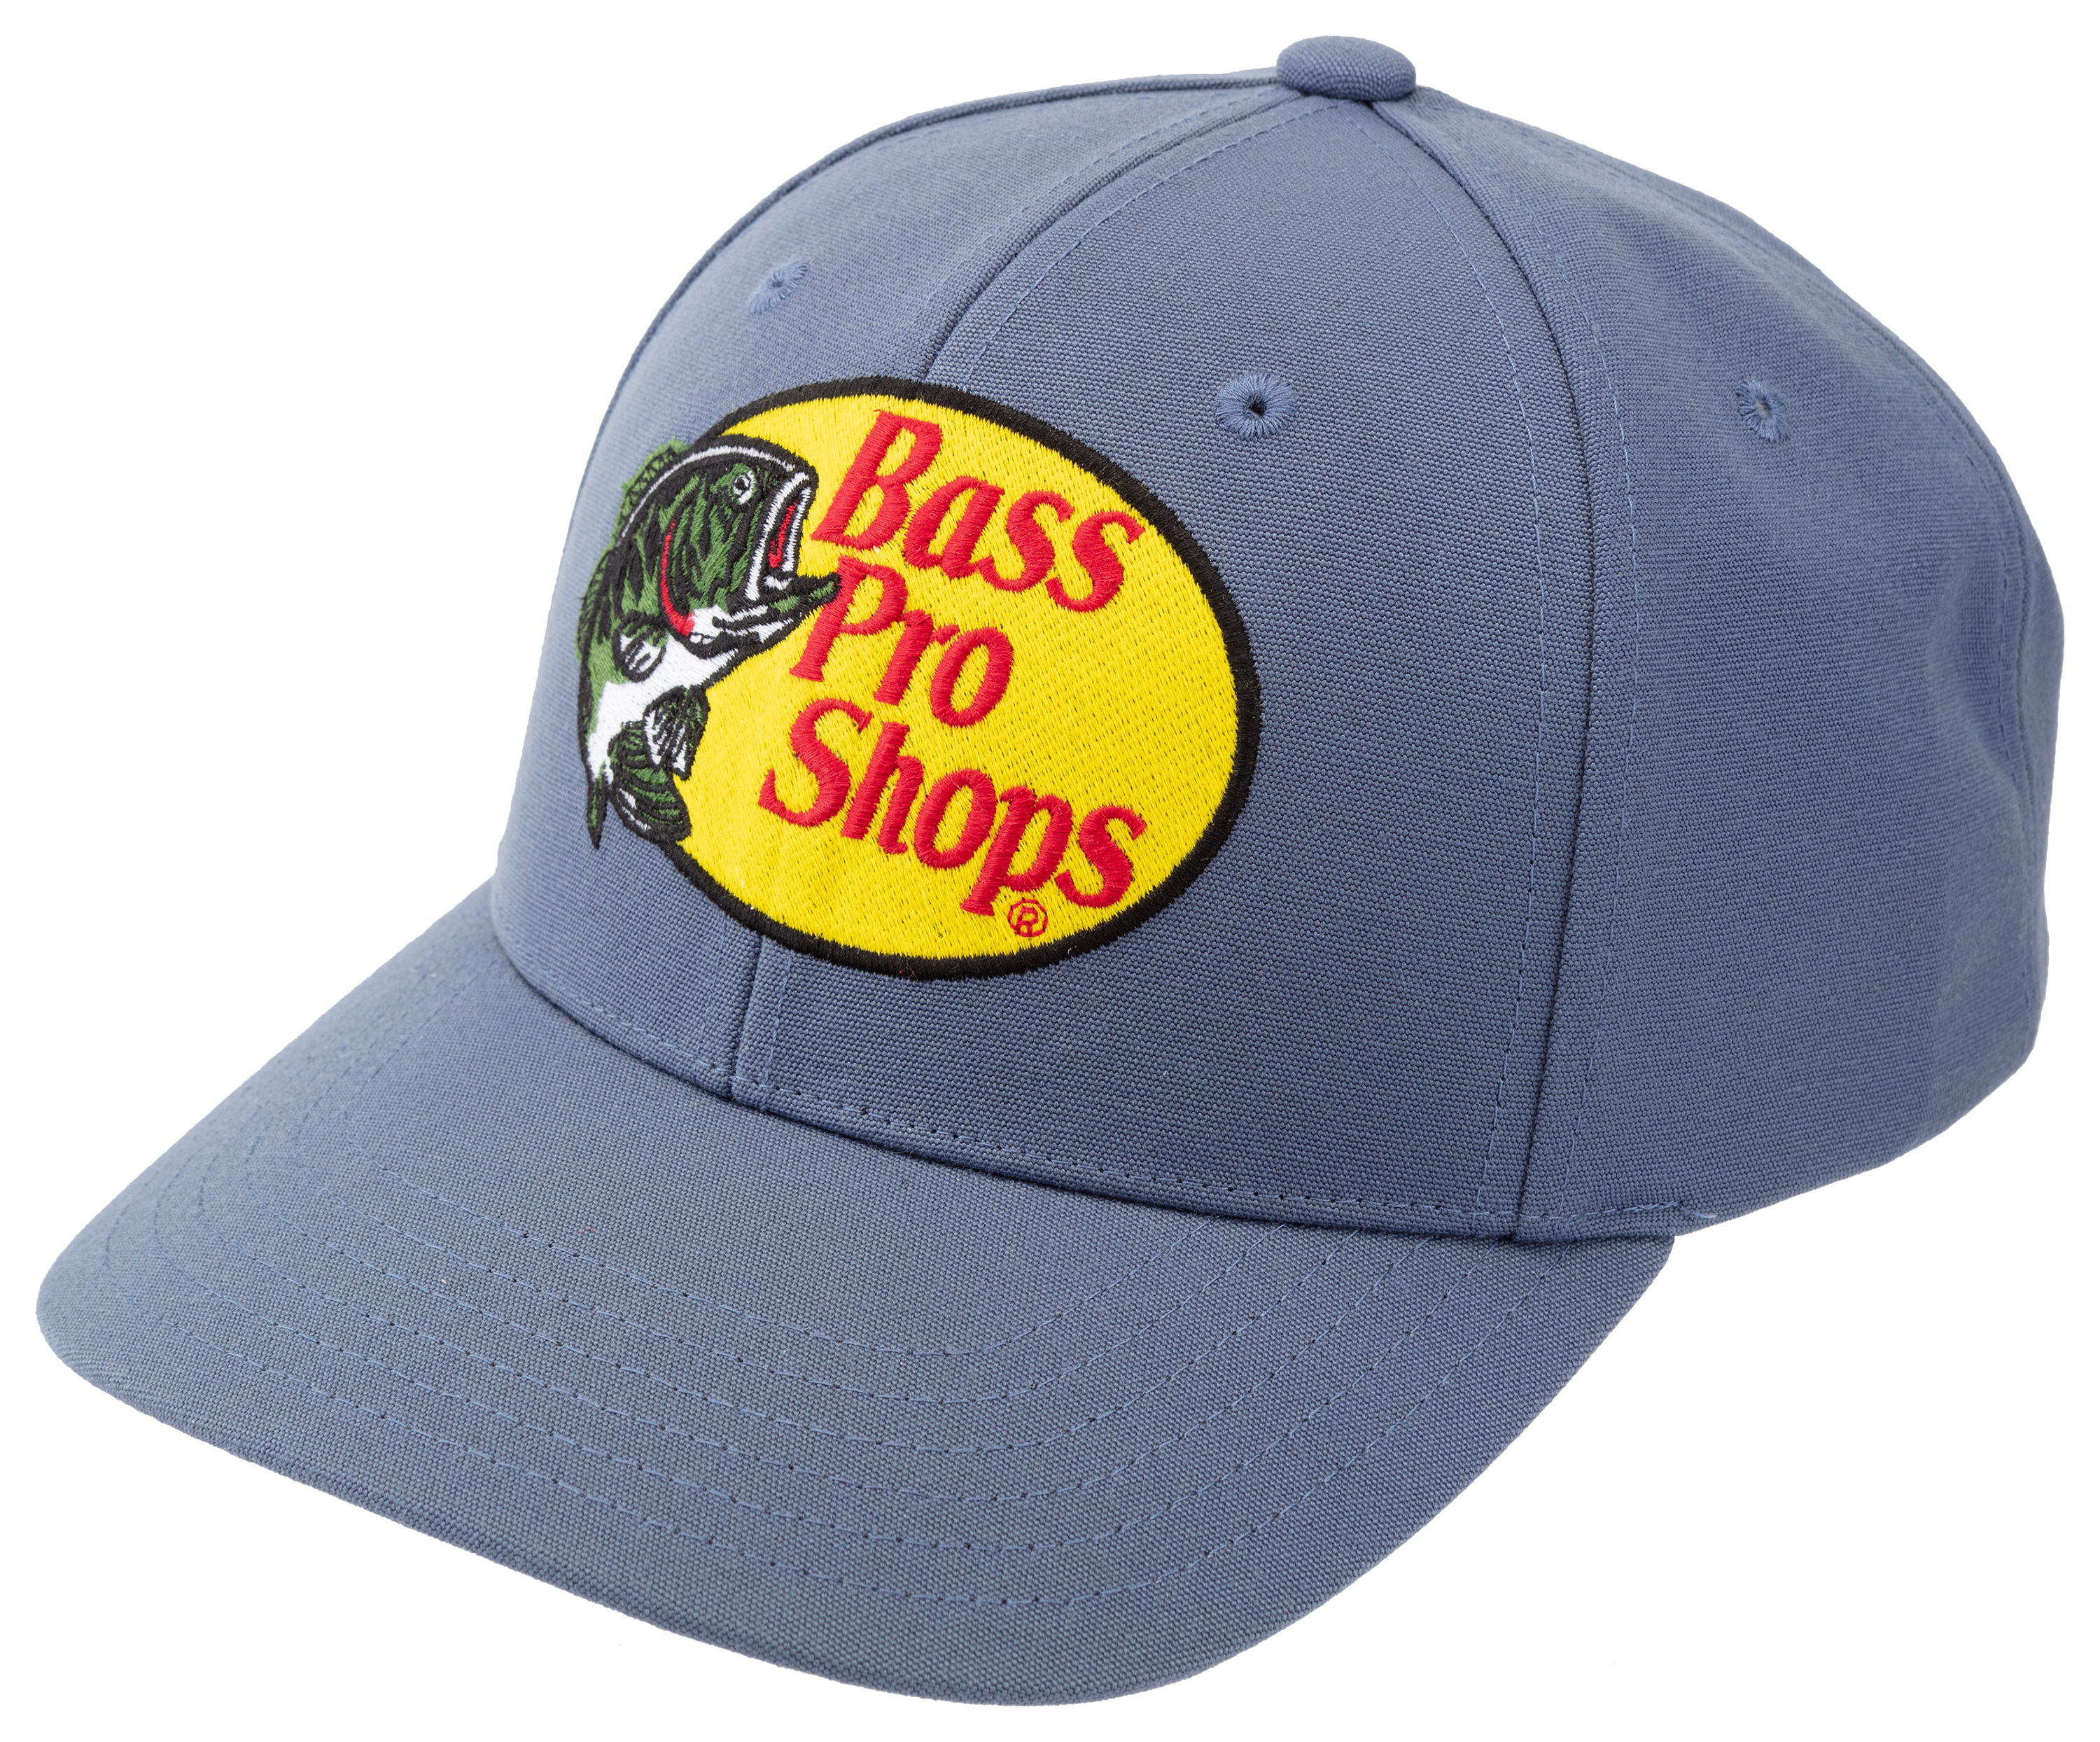 Bass Pro Shops Vintage Sign Trucker Cap